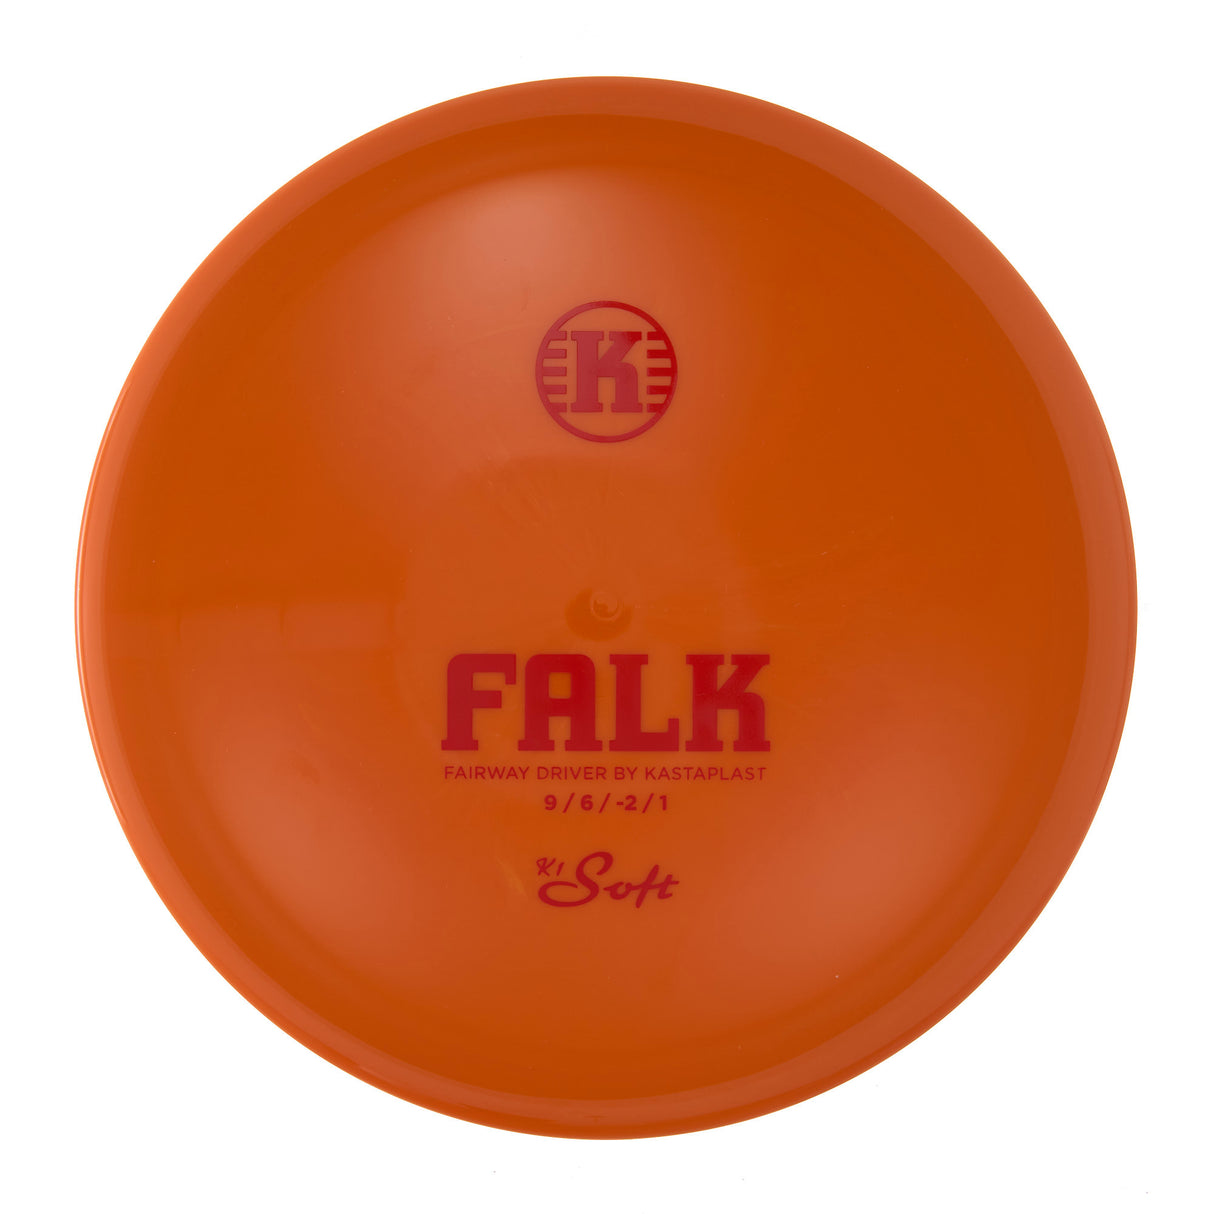 Kastaplast Falk - K1 Soft 173g | Style 0004